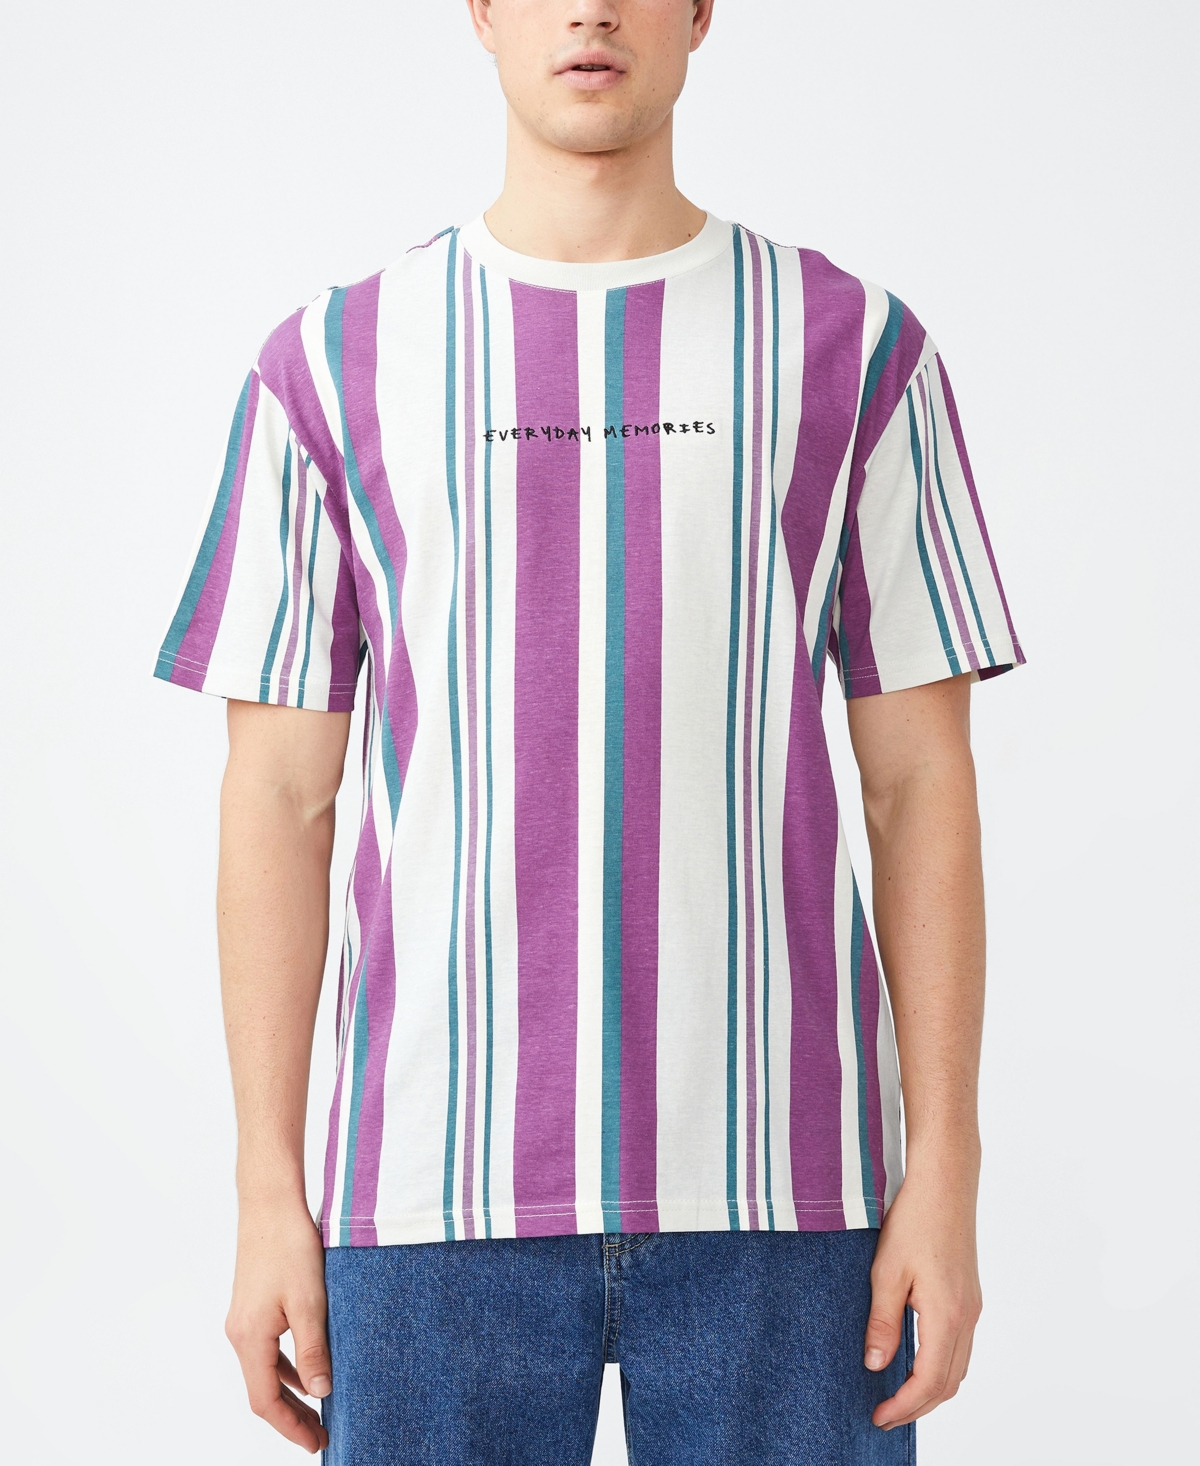 Cotton On Men's Downtown T-shirt In Everyday Memories Purple Stripe